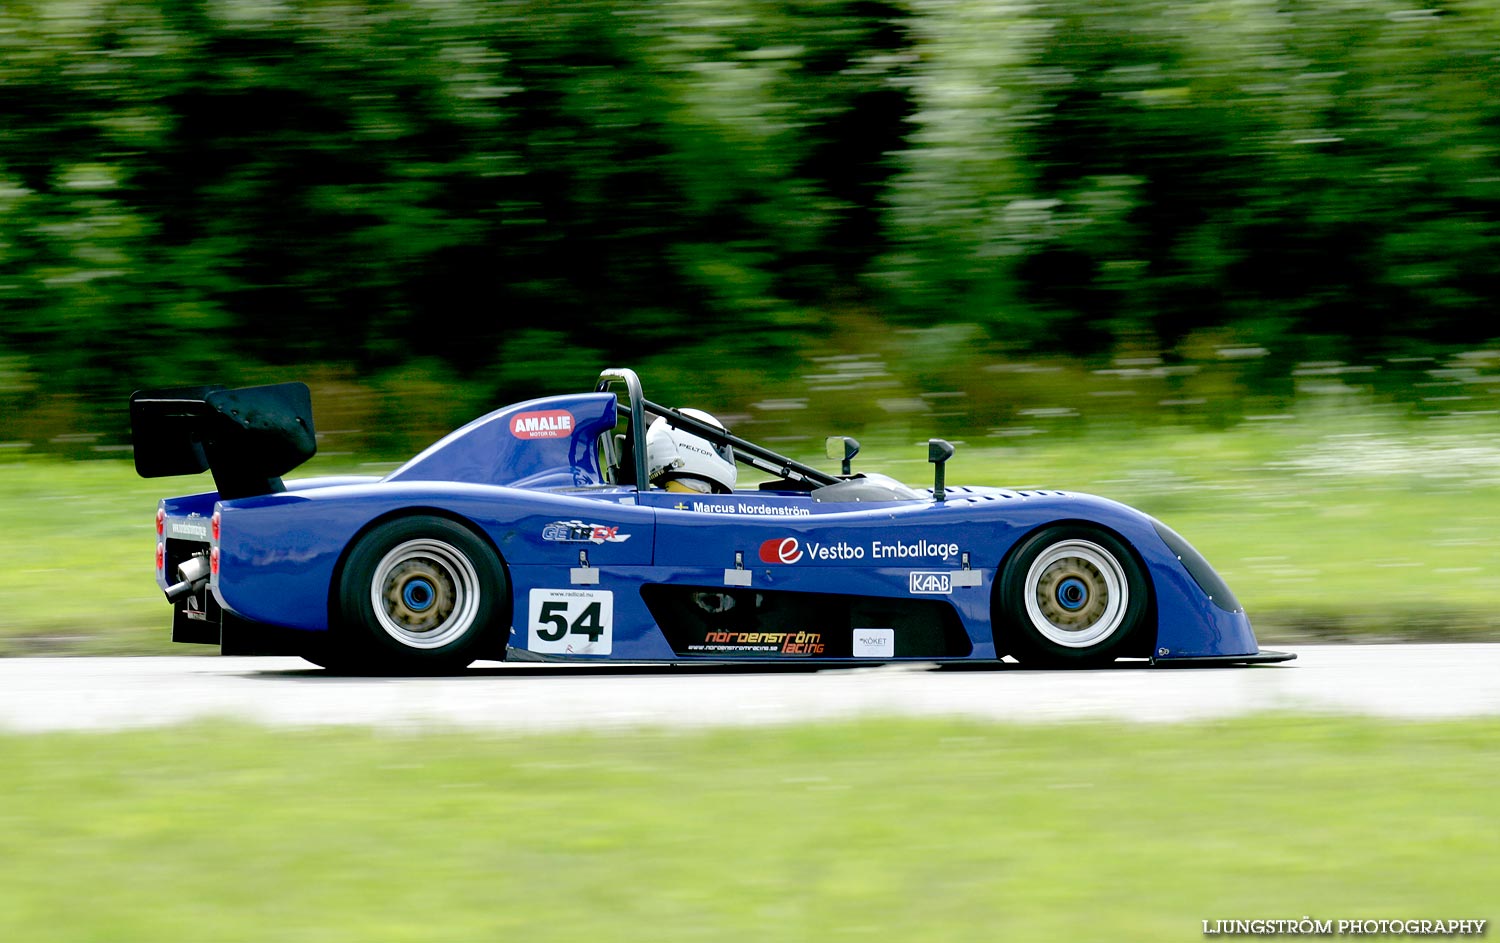 SSK Raceweek,mix,Kinnekulle Ring,Götene,Sverige,Motorsport,,2009,107573